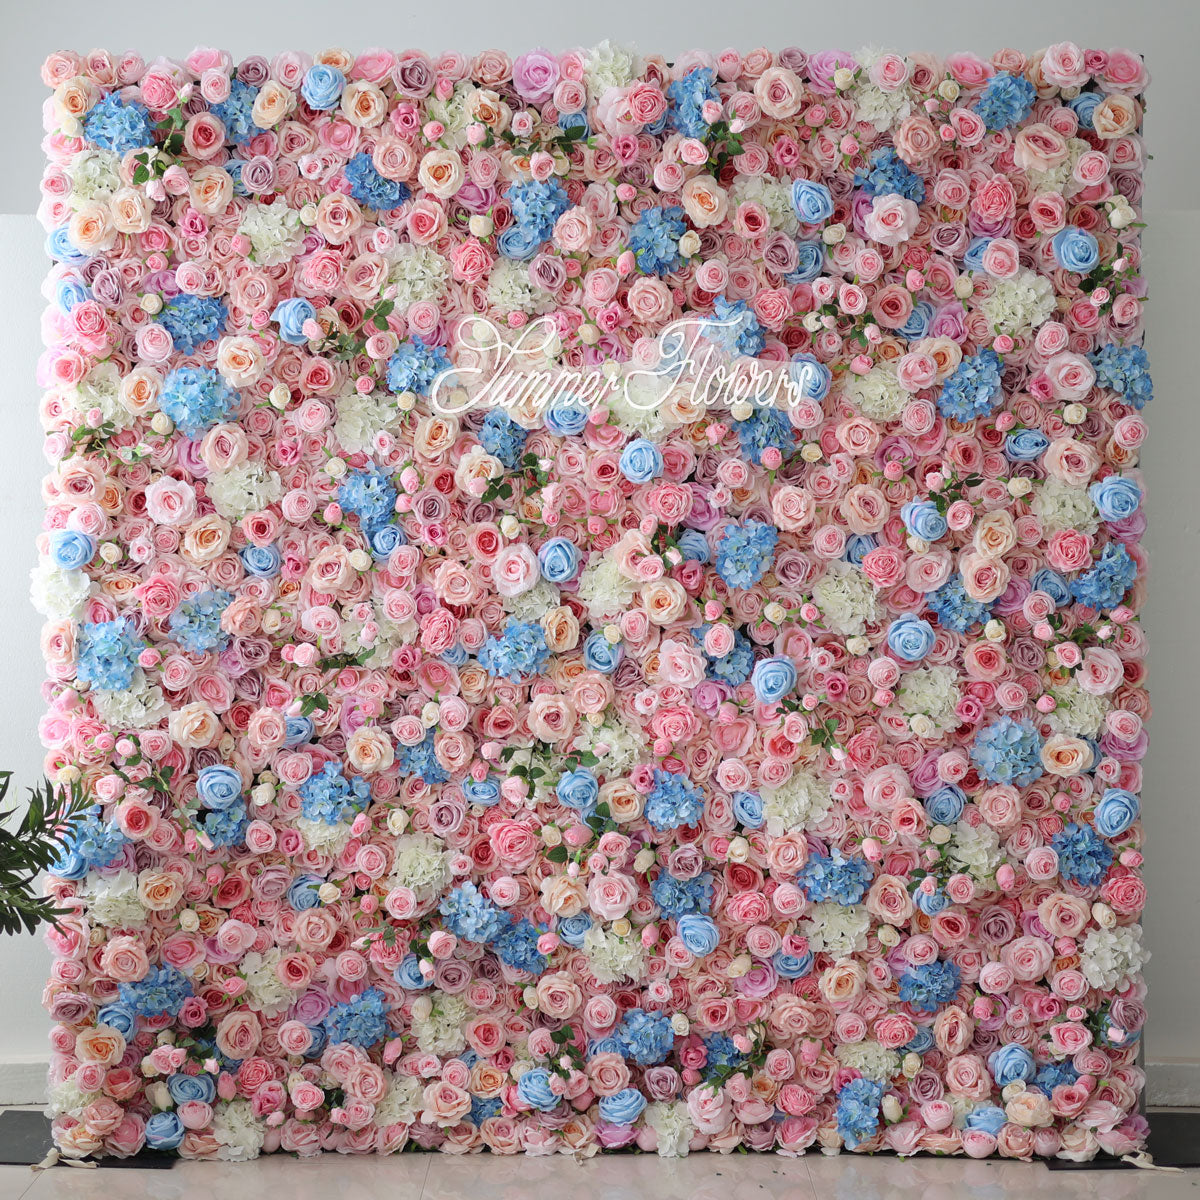 Summer Flower:CB-191 8ft*8ft Cloth Back Artificial Flower Wall Backdrop